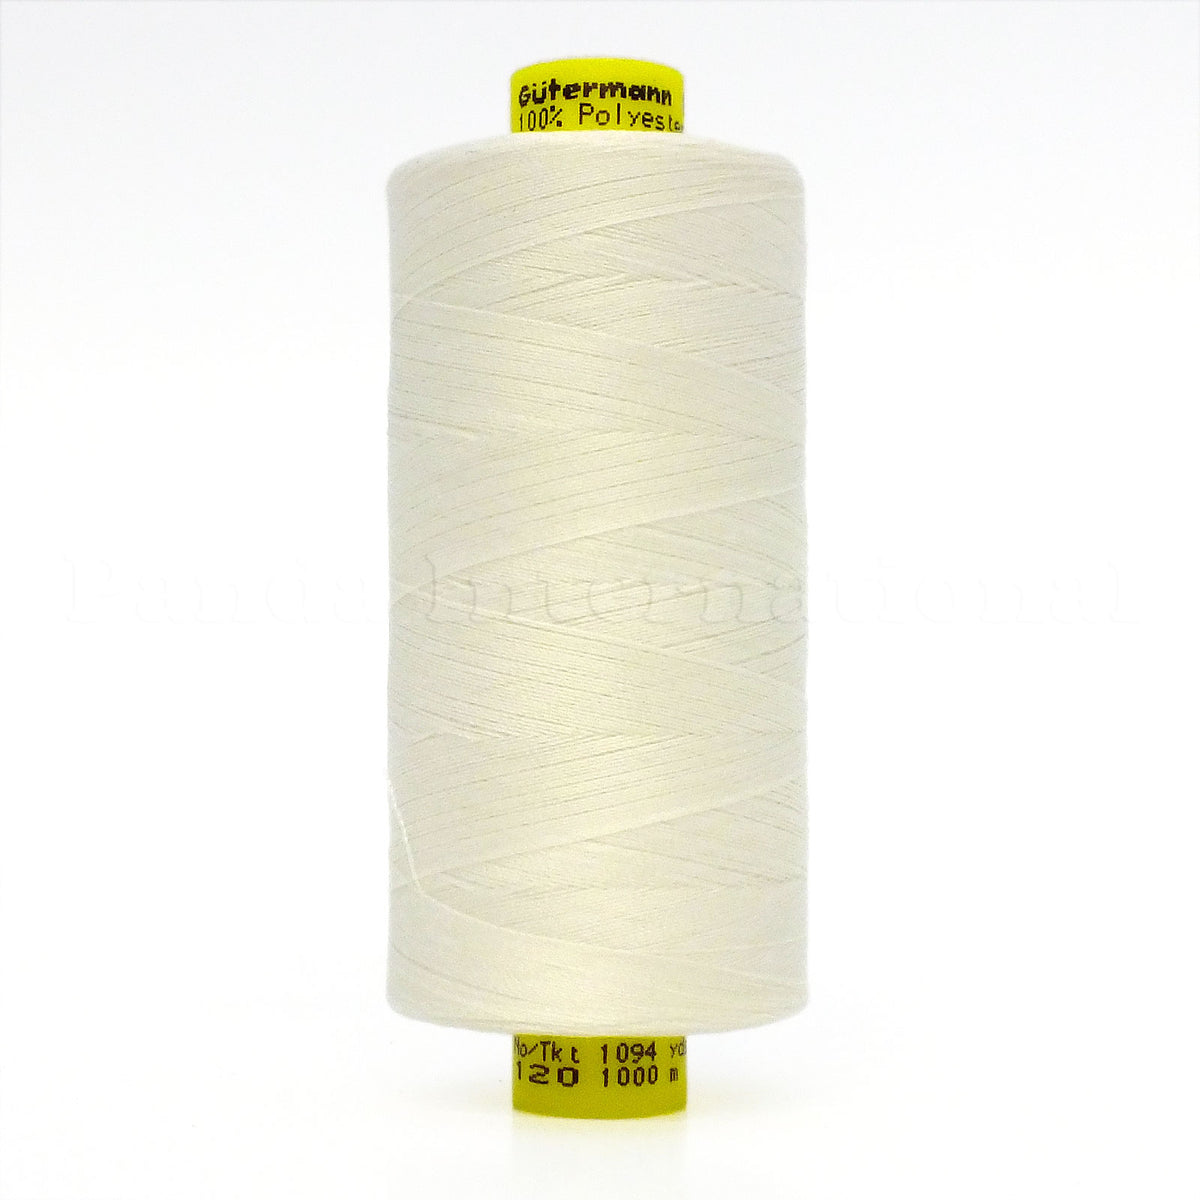 1500-9999 Colours Gutermann Mara 120 Polyester Sew All Thread 1000m/1093yds